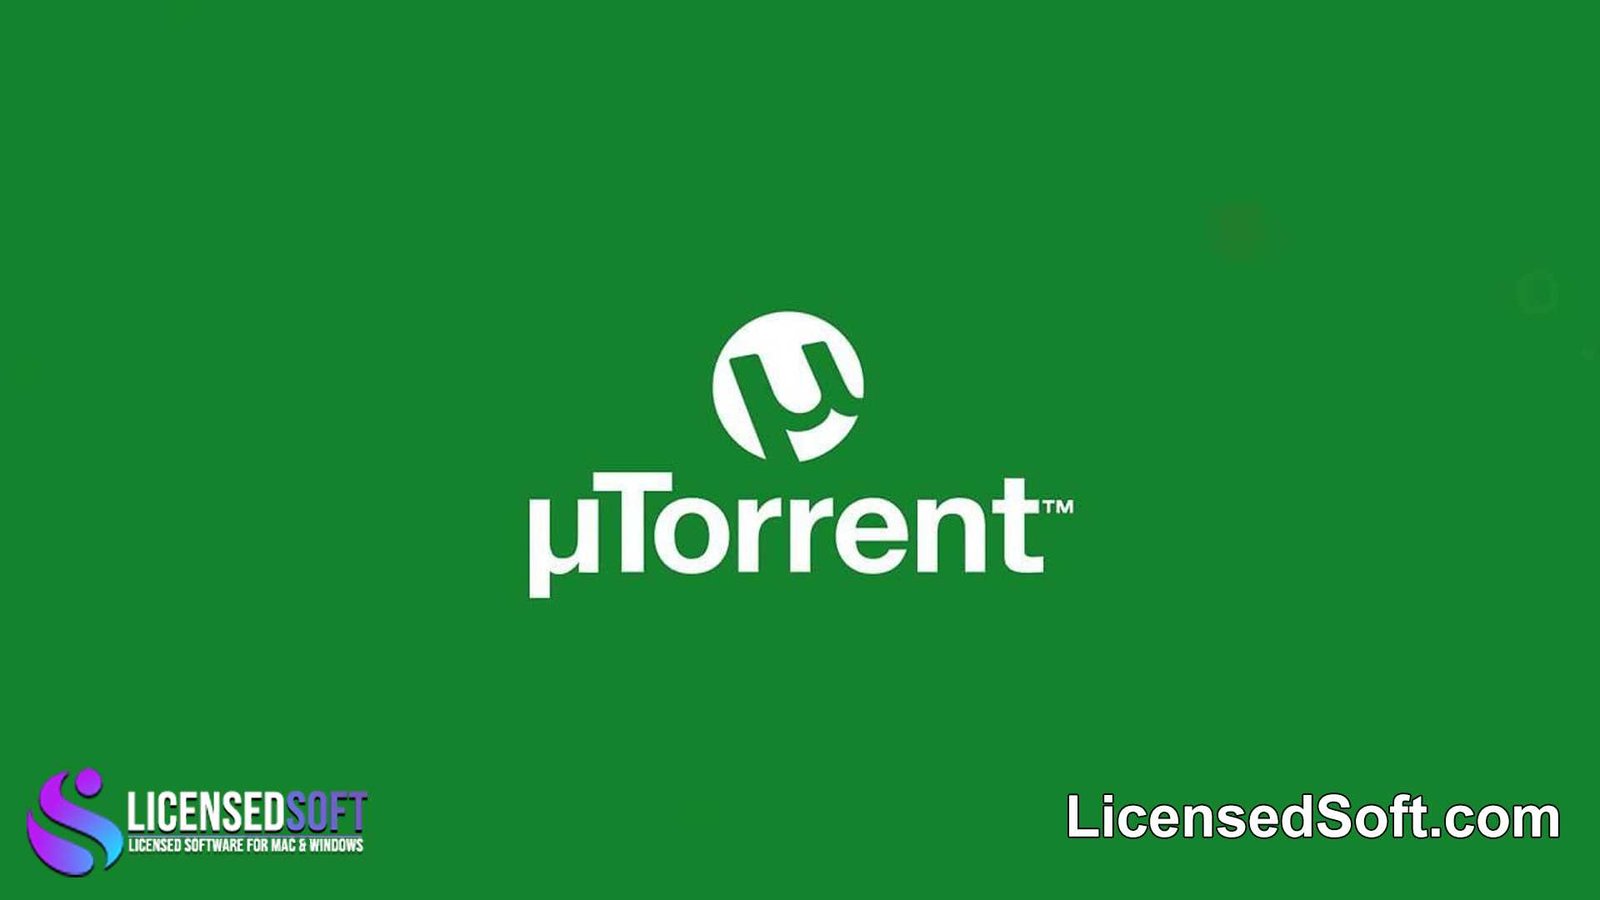 µTorrent Pro Premium Mod Apk Free Download By LicensedSoft